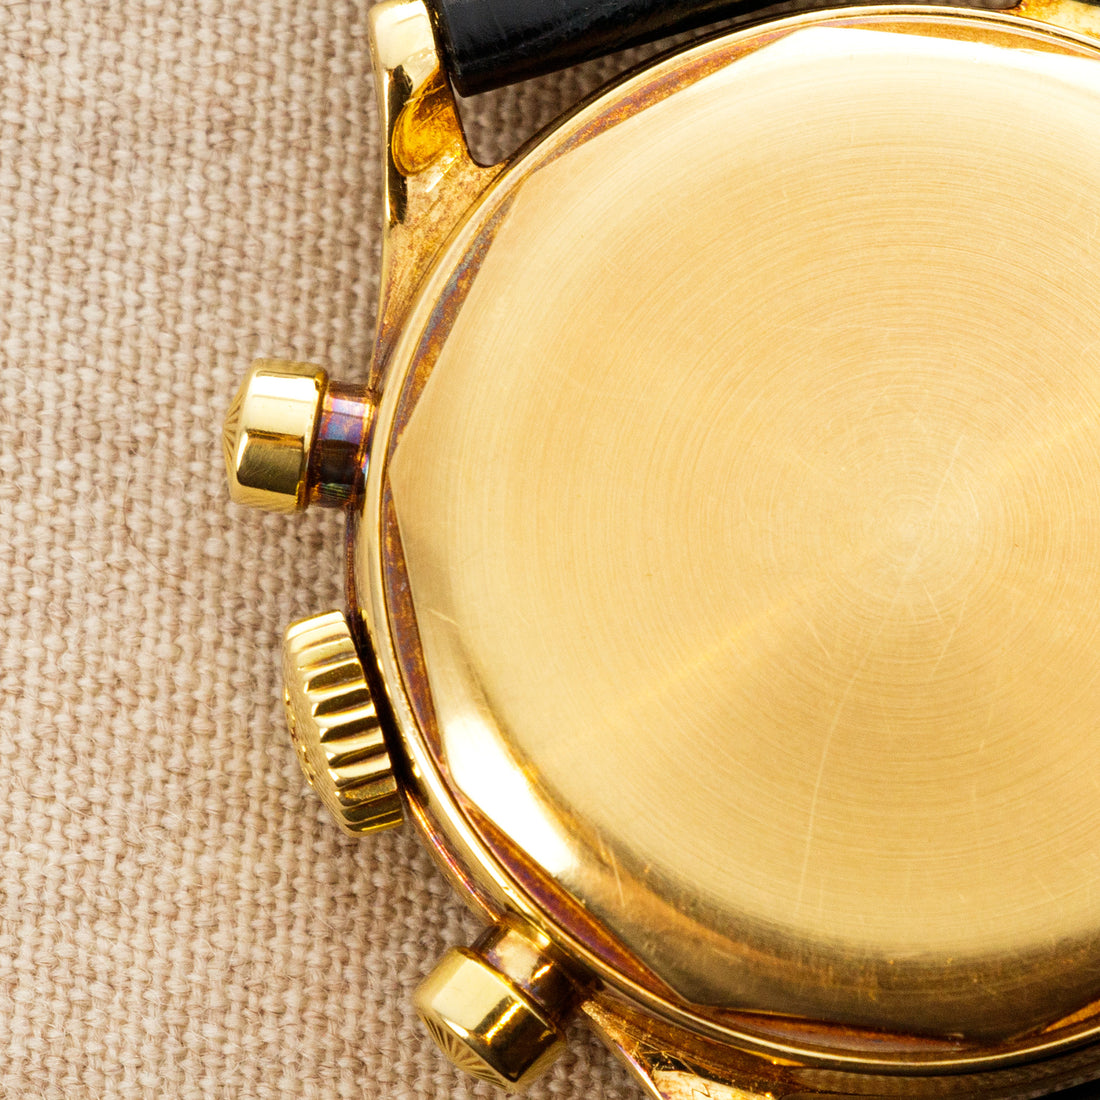 Patek Philippe Yellow Gold Chronograph Tasti Tondi Watch Ref. 1463, Retailed by Tiffany & Co.